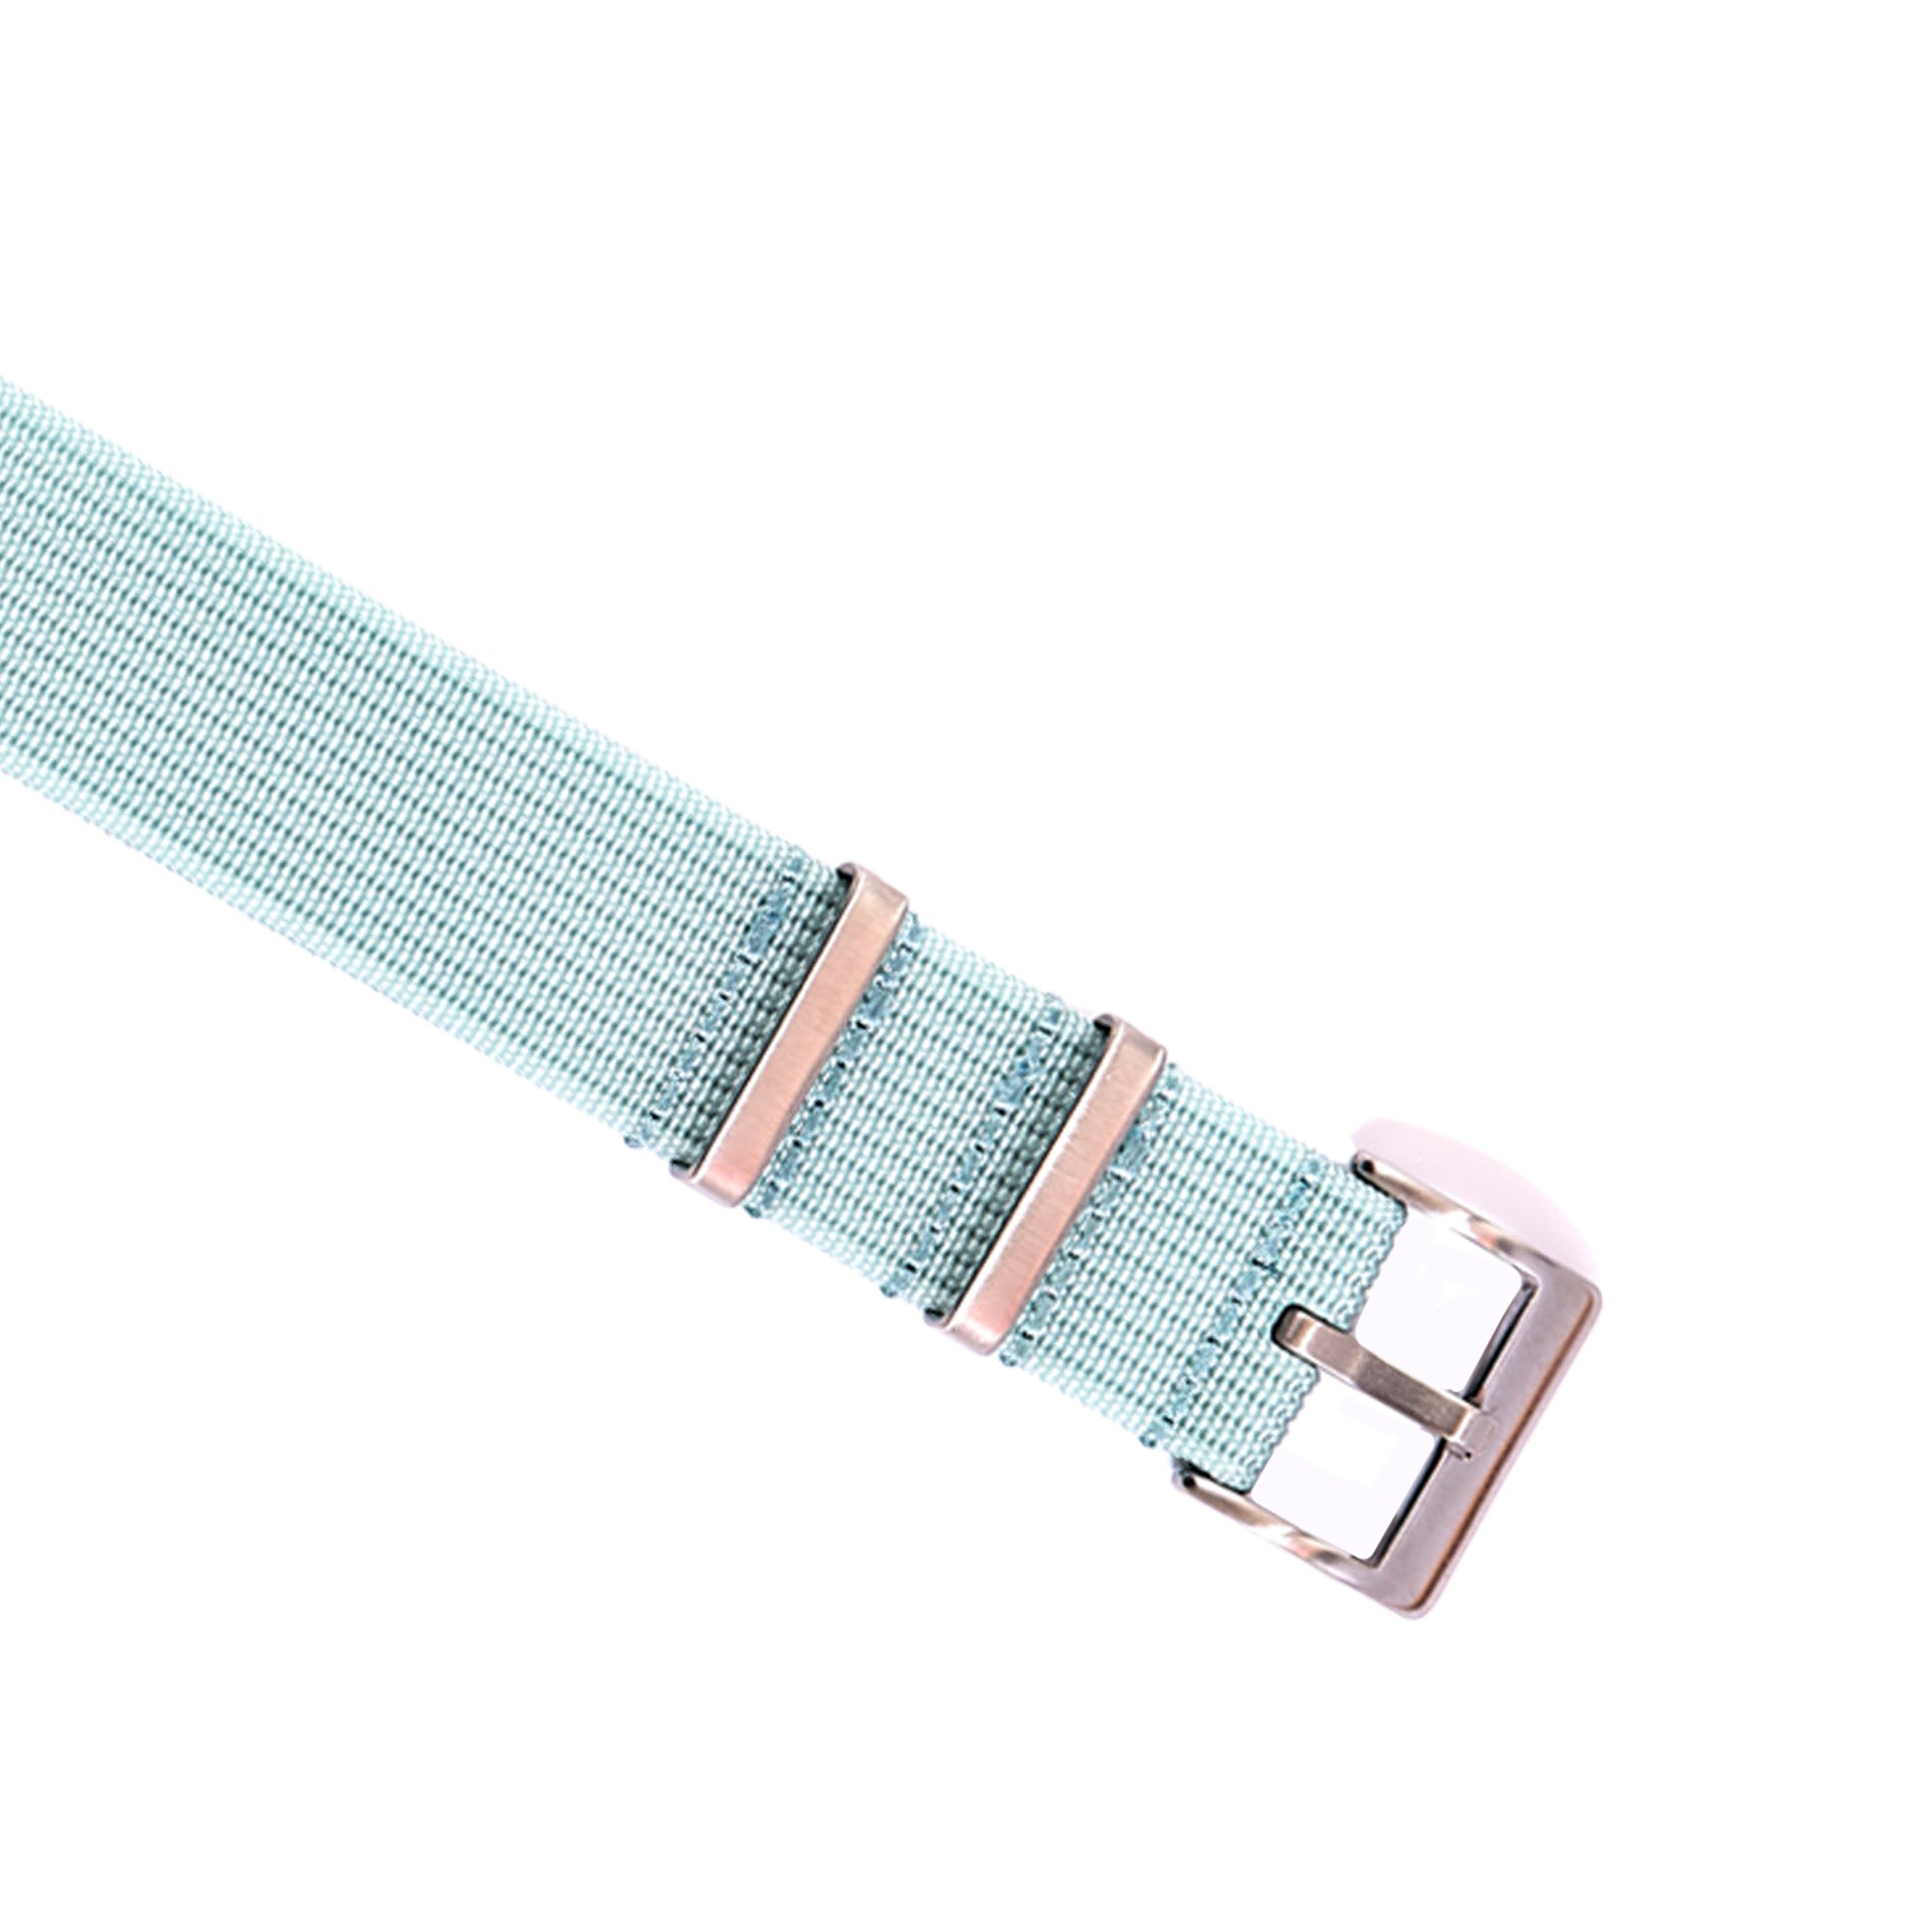 Ribbed Ballistic Nylon Strap - Light Blue (2416)